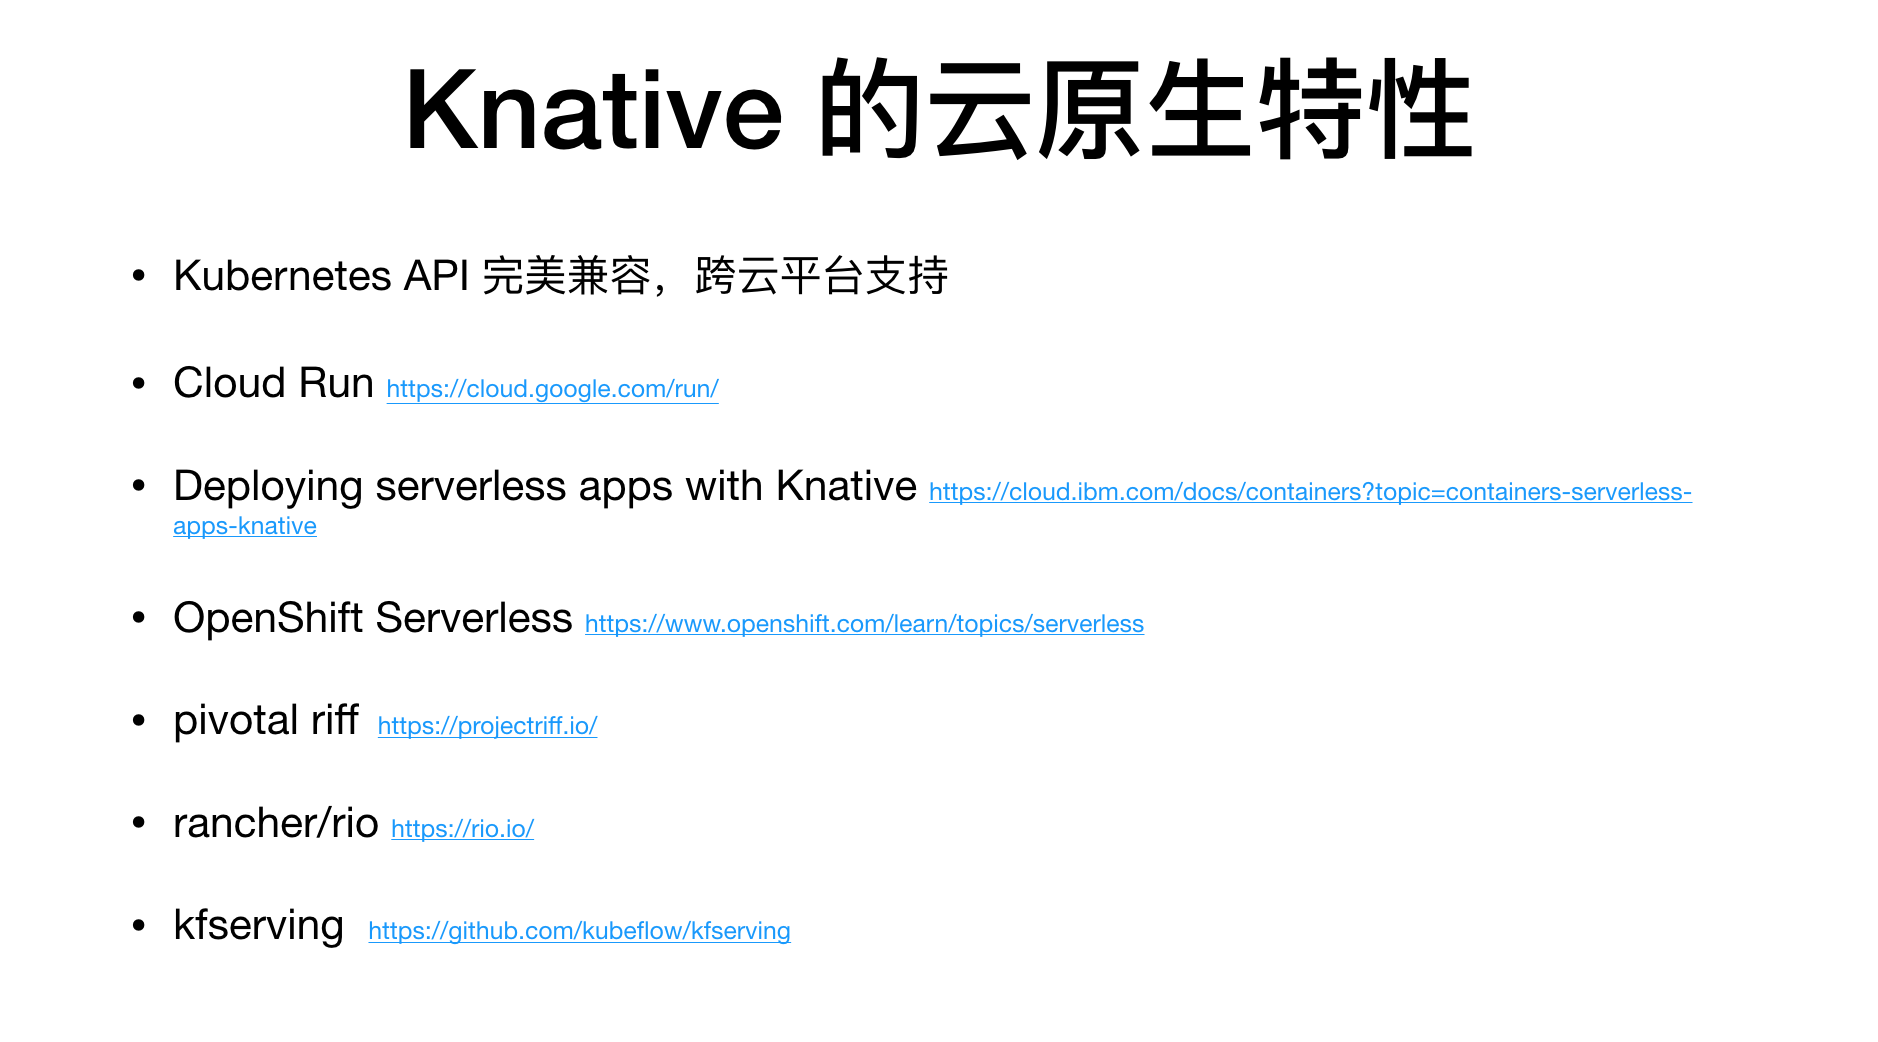 Knative Serverless 之道：如何 0 运维、低成本实现应用托管？ 